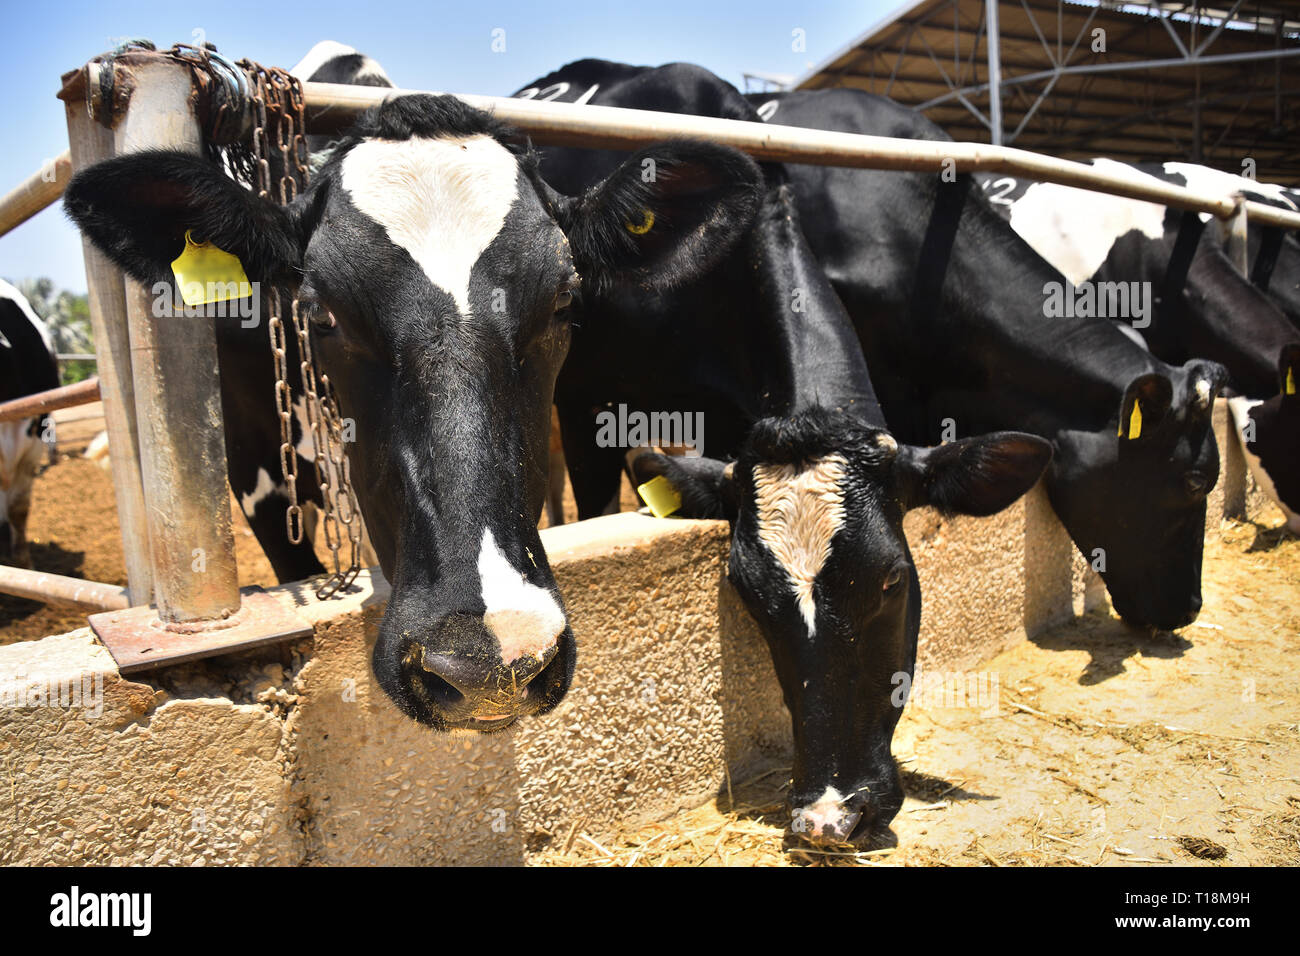 Cows feeding in a livestock breeding kibbutz. Central Israel. Stock Photo